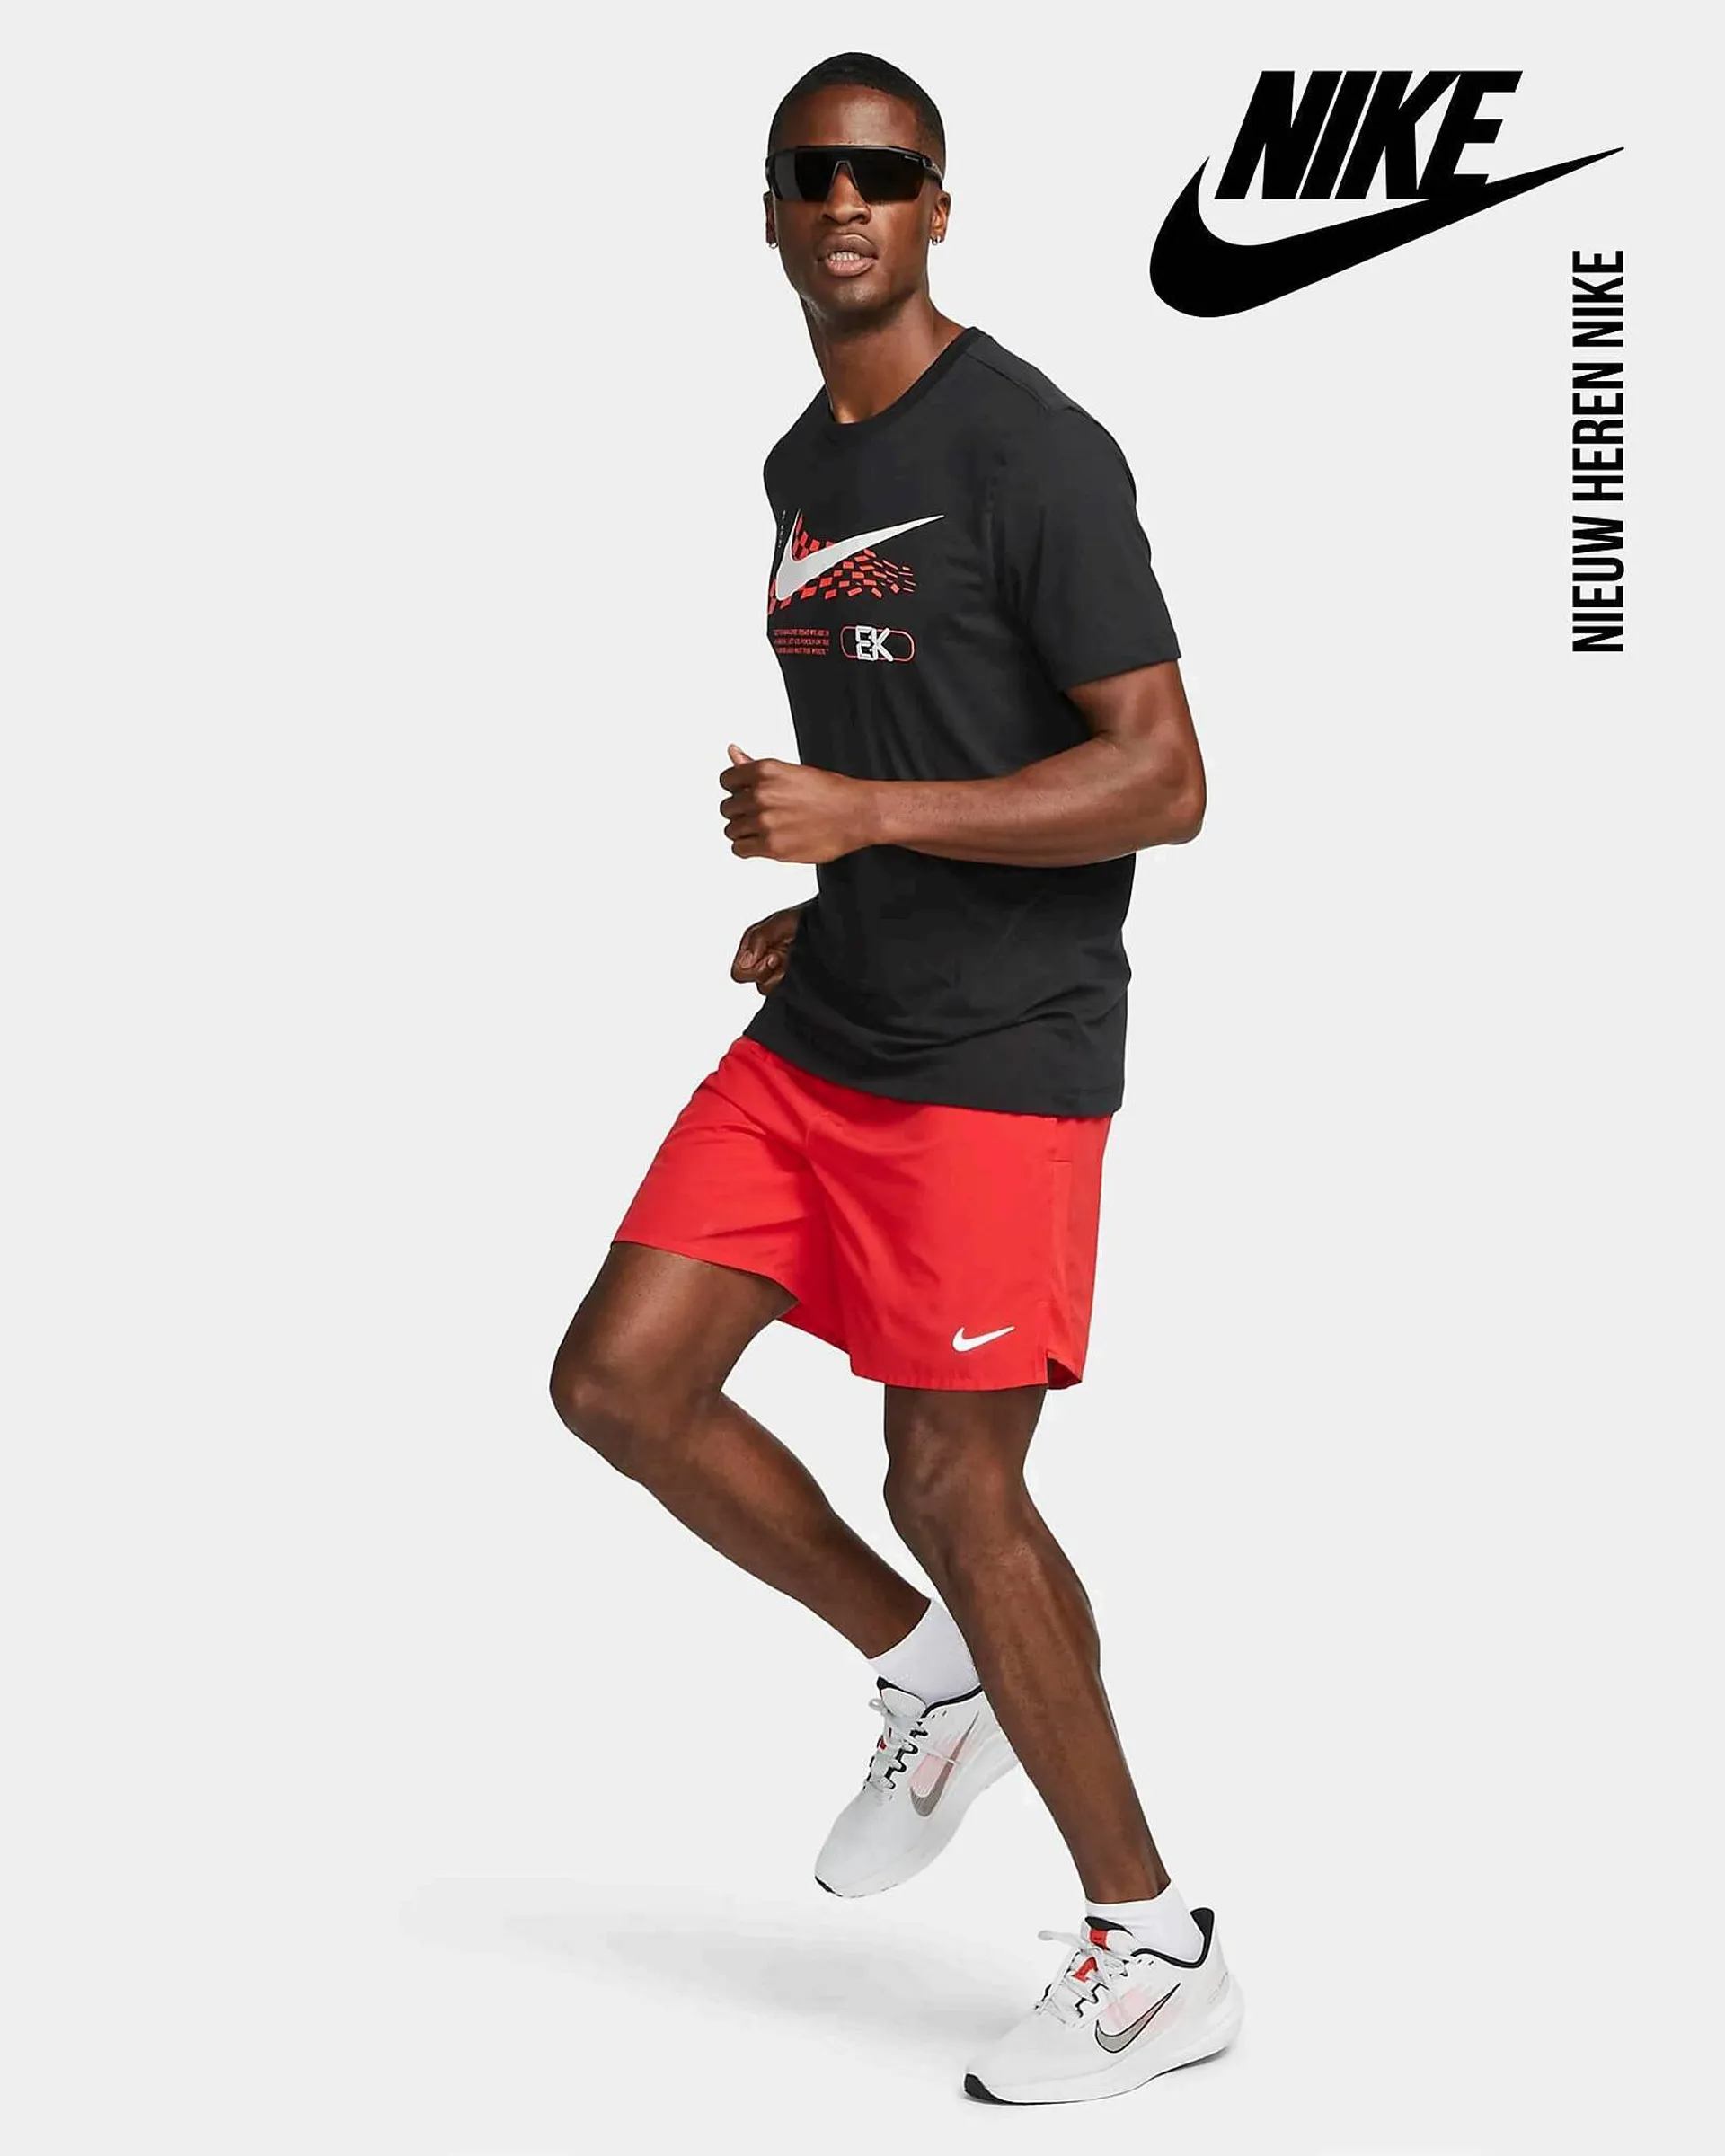 Nike folder - 1